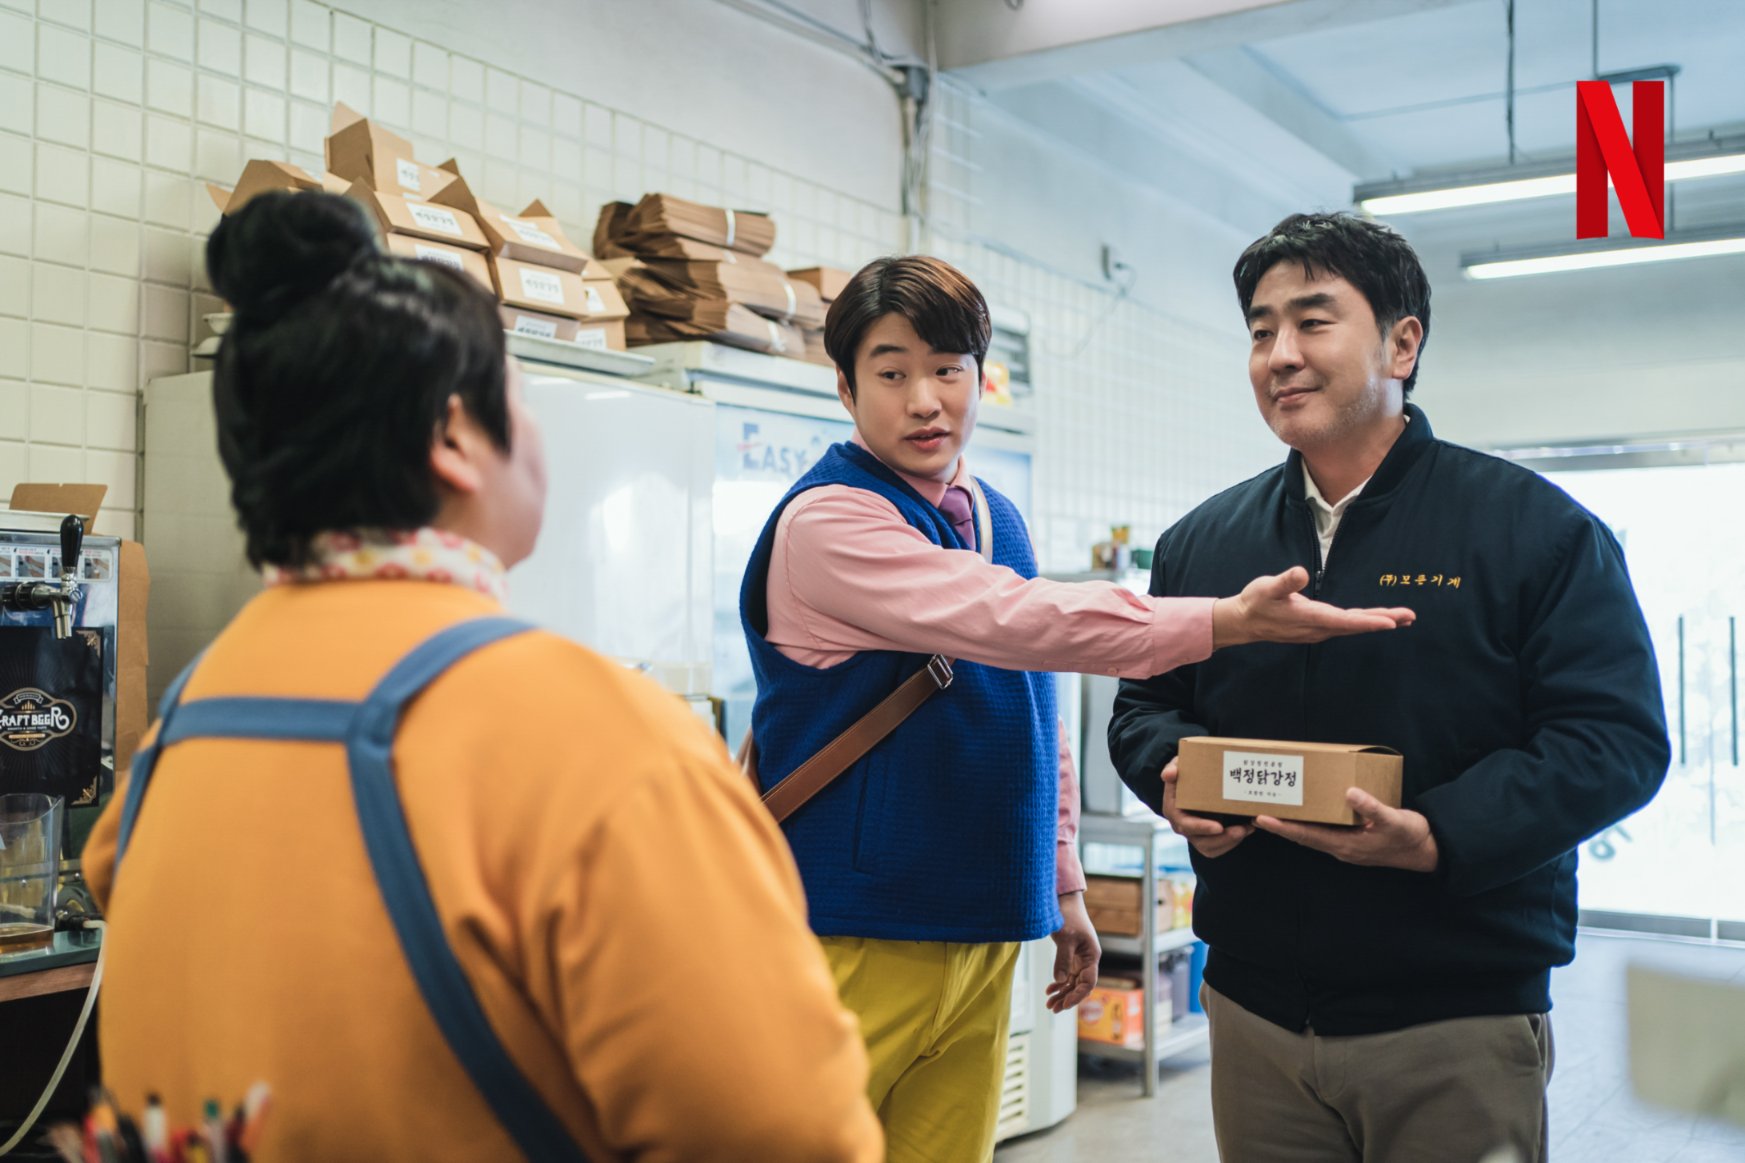 Ryu Seung Ryong And Ahn Jae Hong Dish On Acting With Kim Yoo Jung In New Comedy Drama “Chicken Nugget”